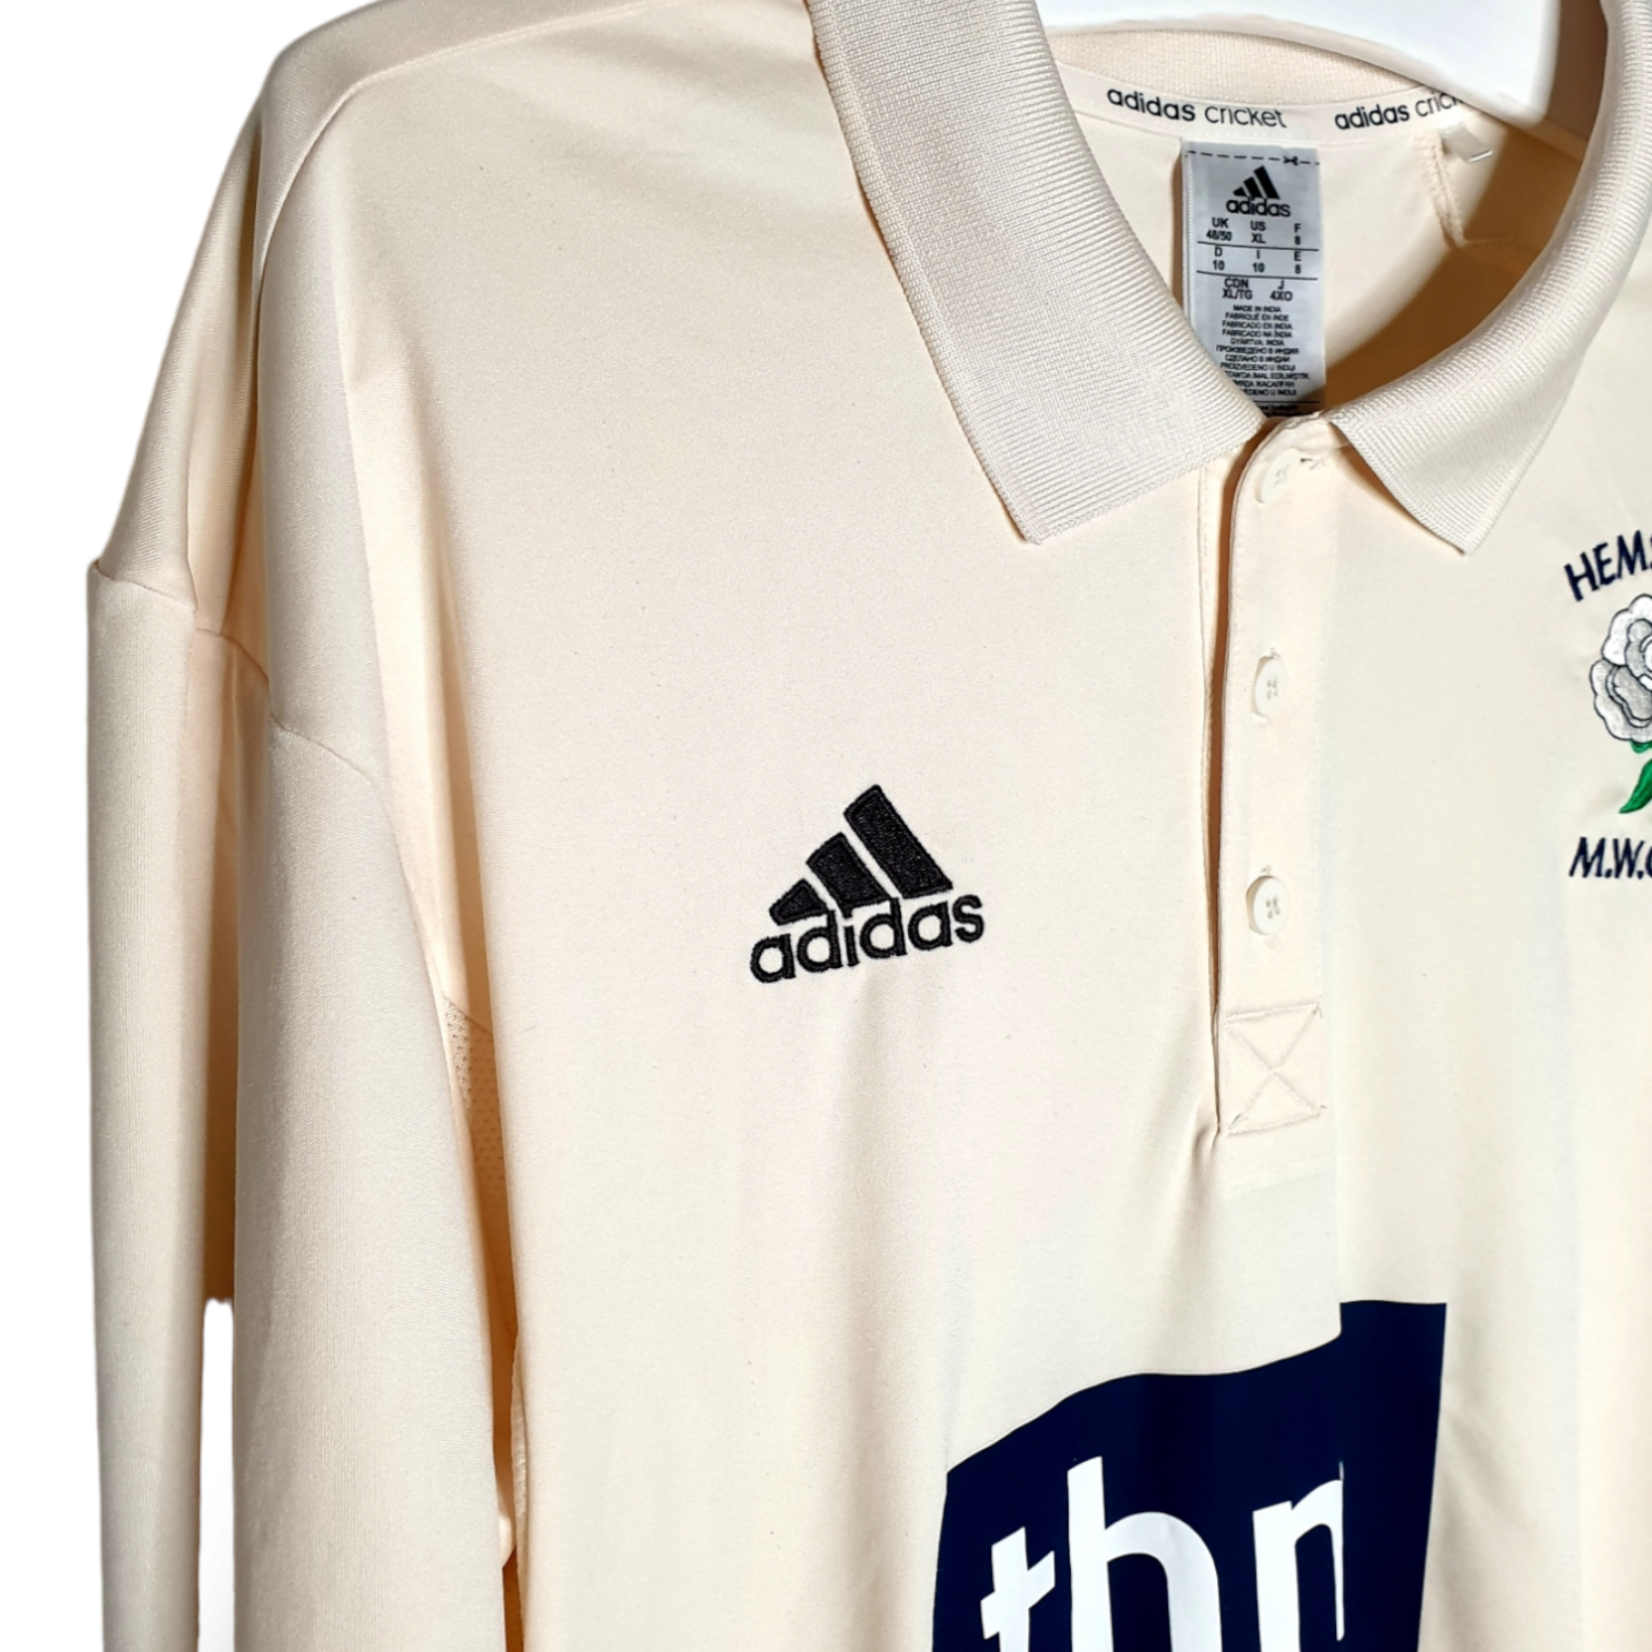 Adidas Original Adidas Cricket vintage shirt Hemsworth Miners Welfare CC